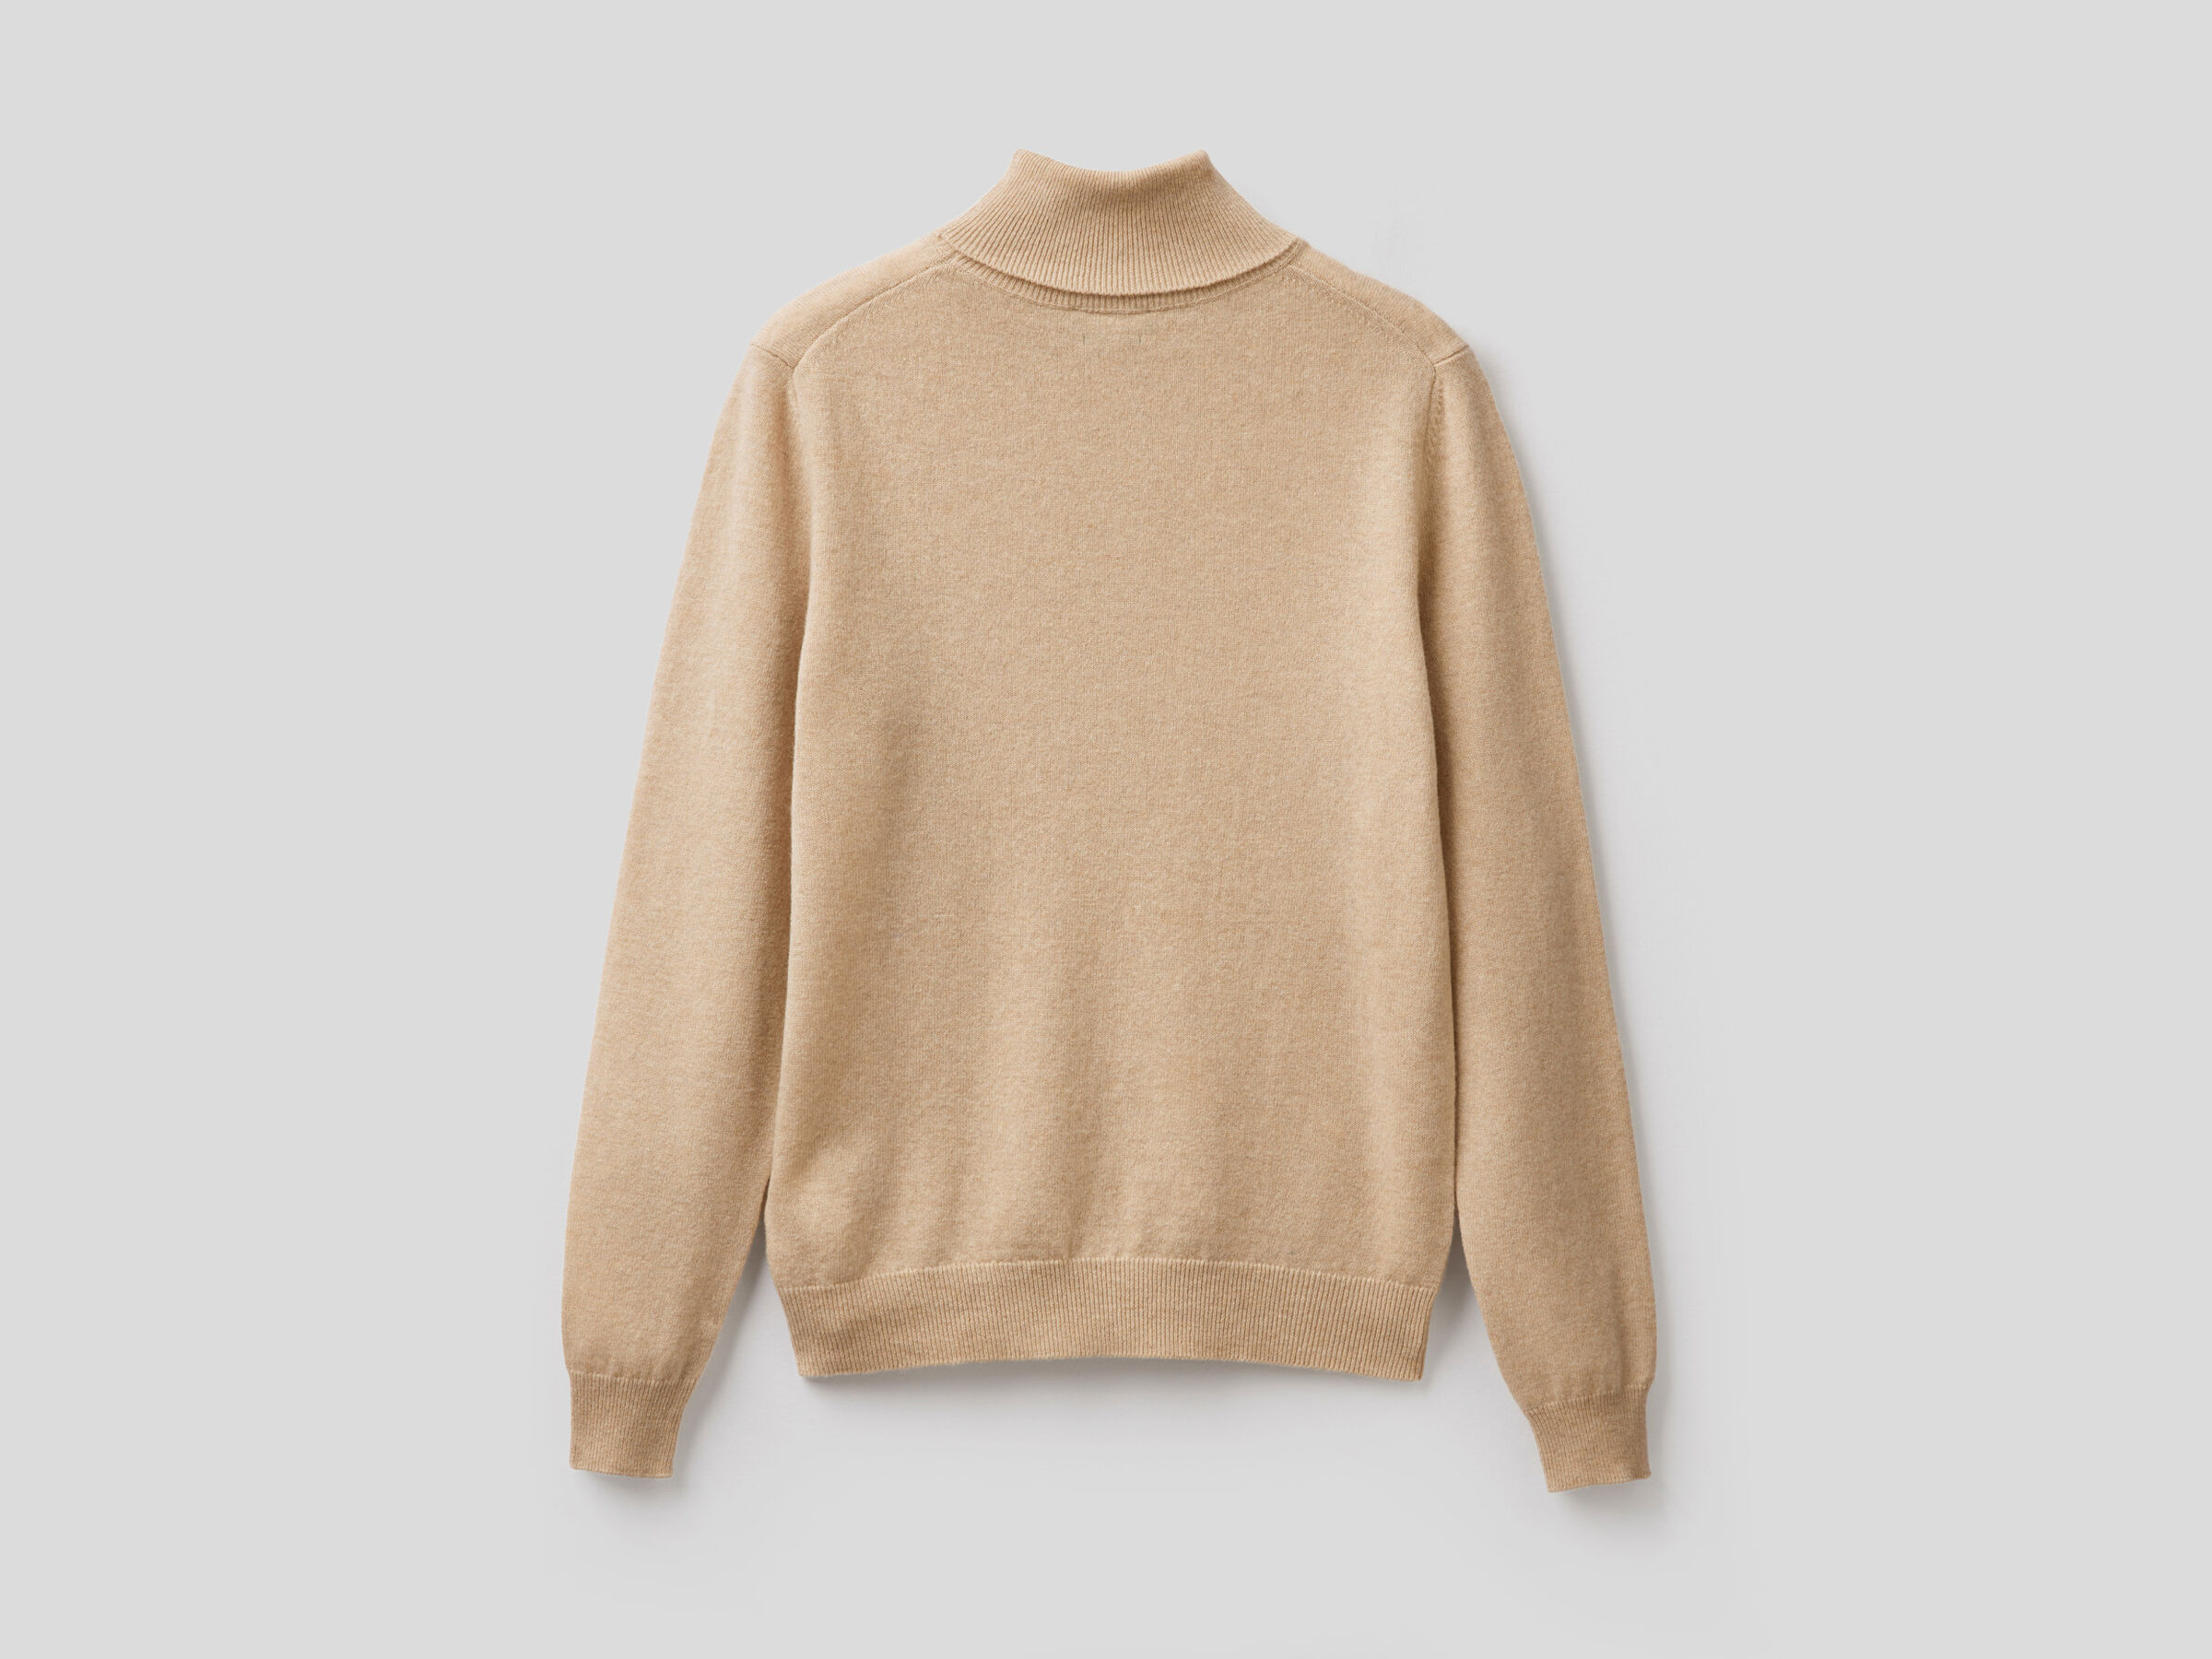 Beige turtleneck sweater in pure Merino wool - Beige | Benetton